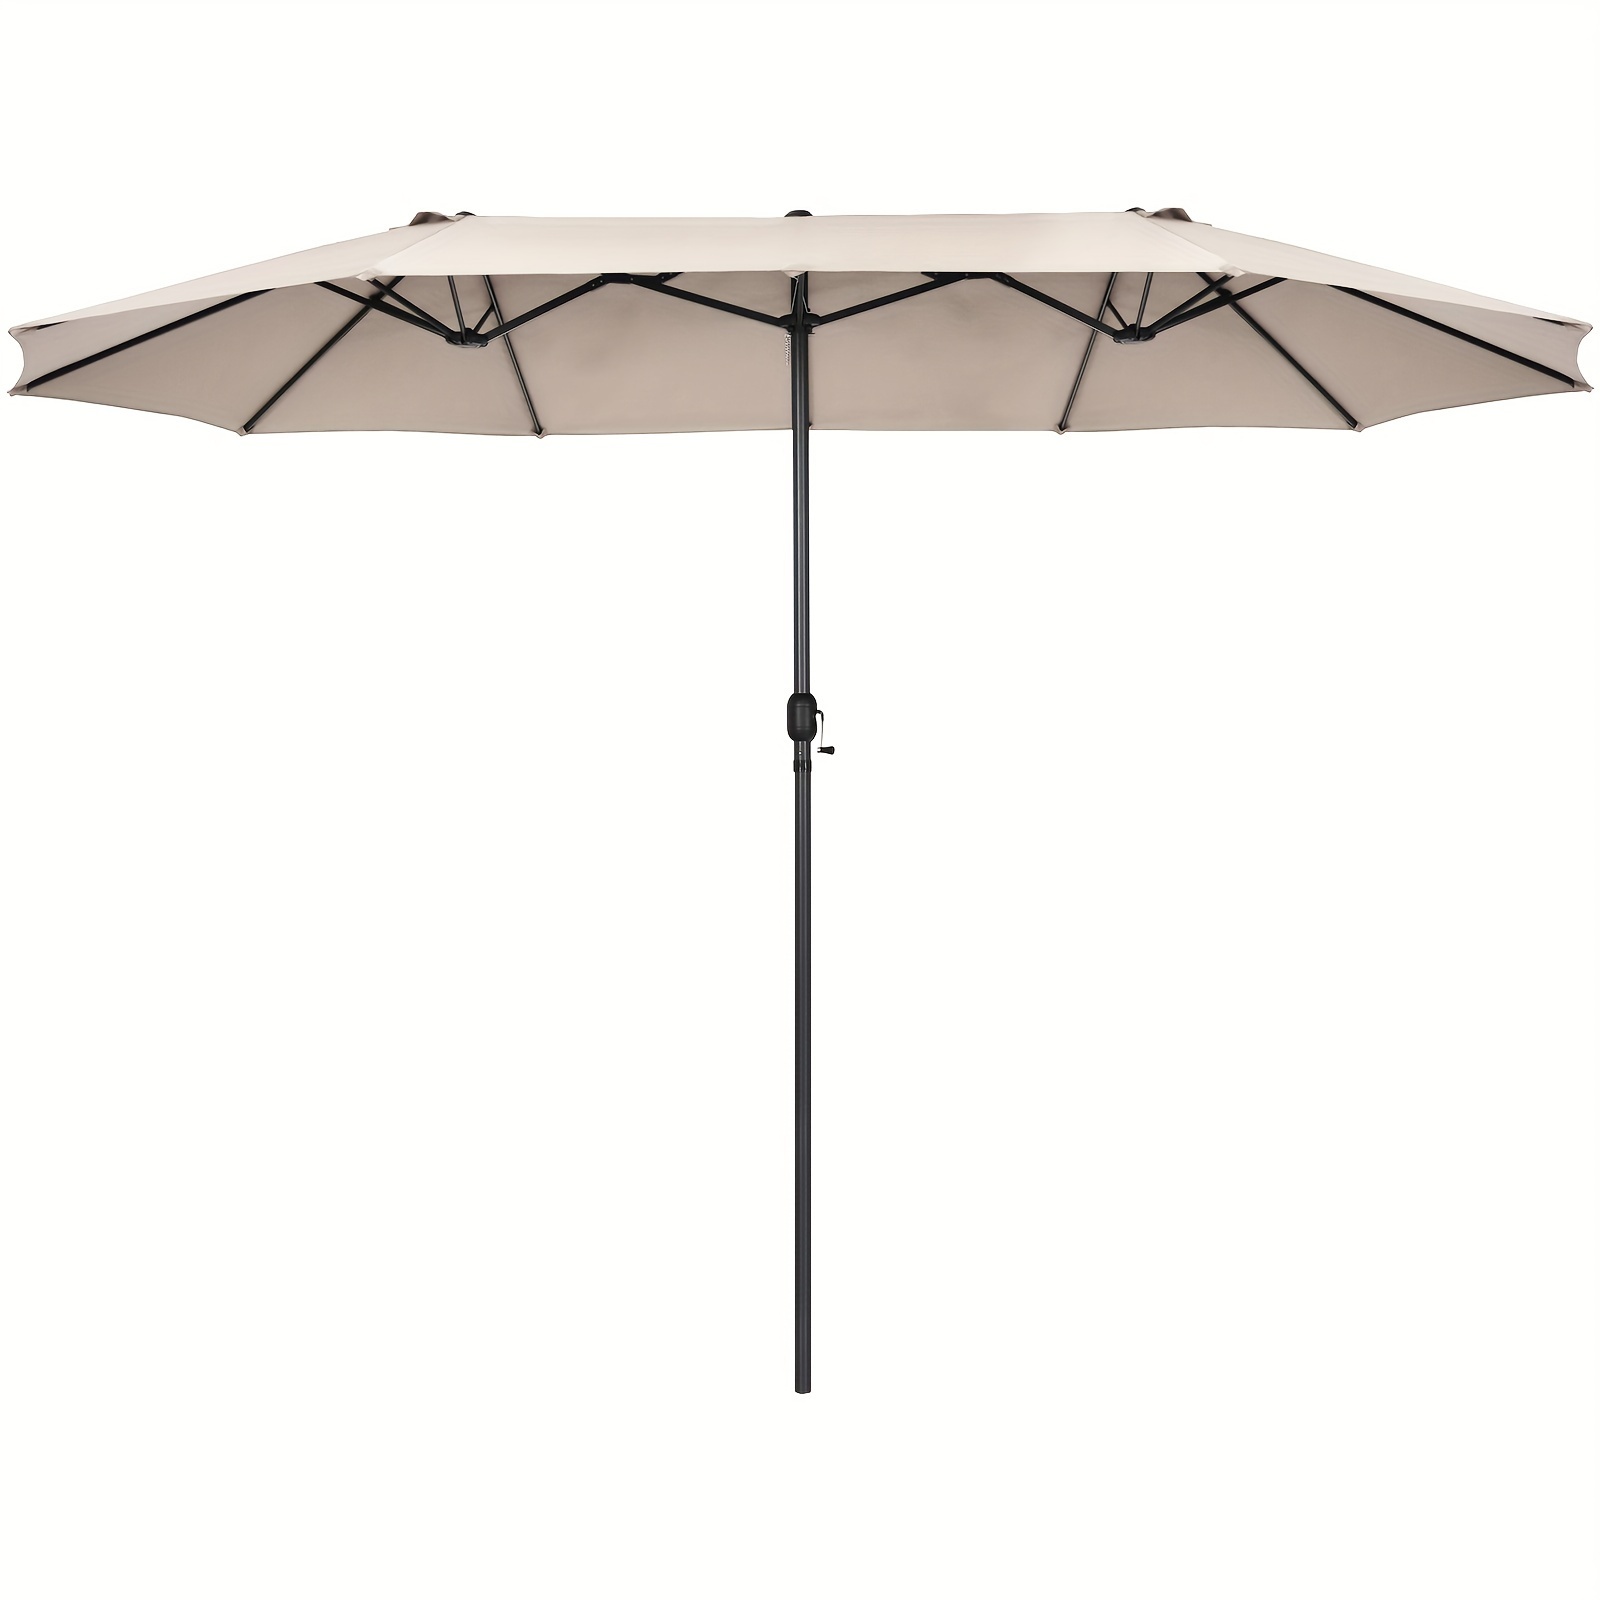 

1pc 15ft Patio Umbrella, Double-sided Outdoor Market Extra Large Umbrella With Crank, Oversize Umbrella For Patio Garden Pool Backyard Beach, Beige